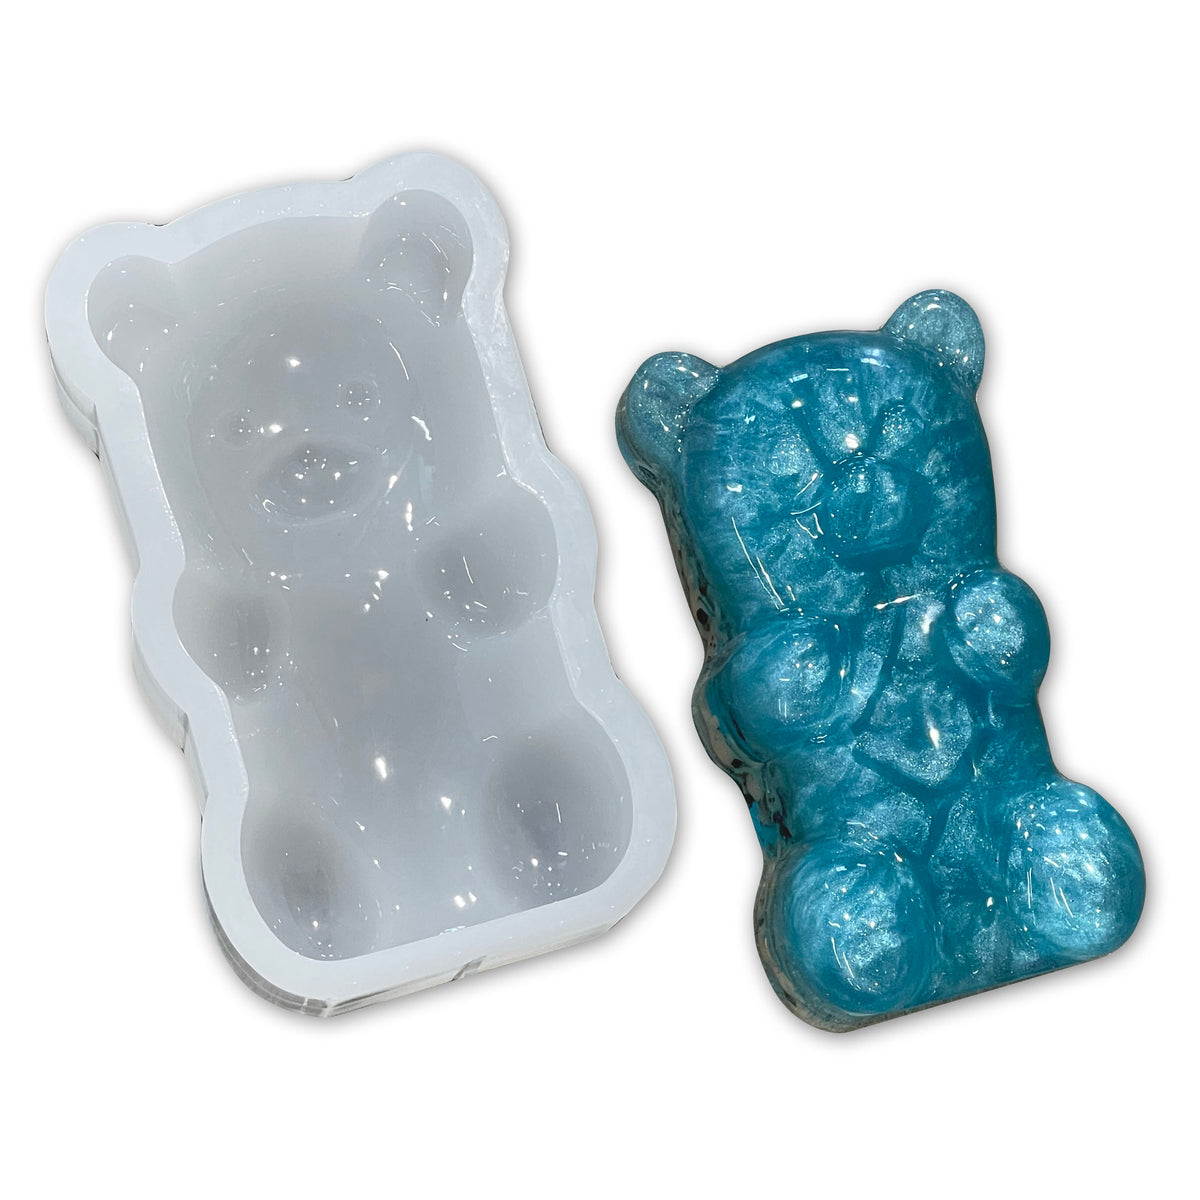 SHINY Gummy Bear Silicone Resin Mold - 3 Sizes Available - Ship